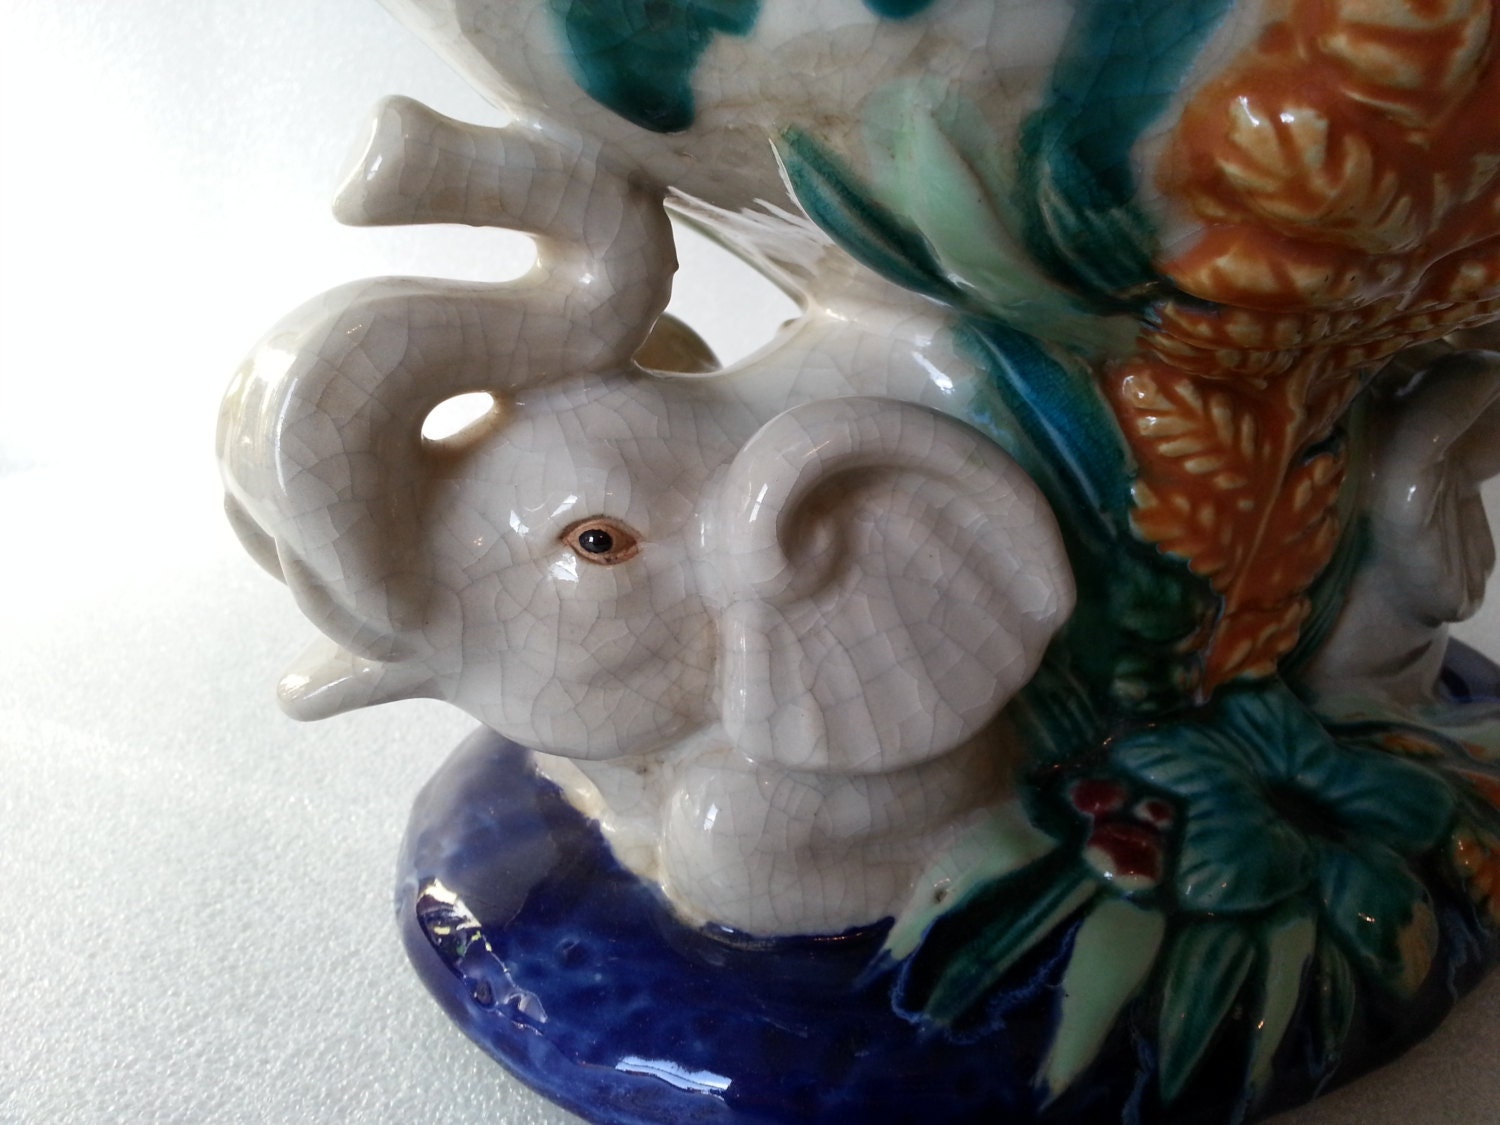 Vintage Ceramic Pottery Centerpiece Bowl With Elephant Heads